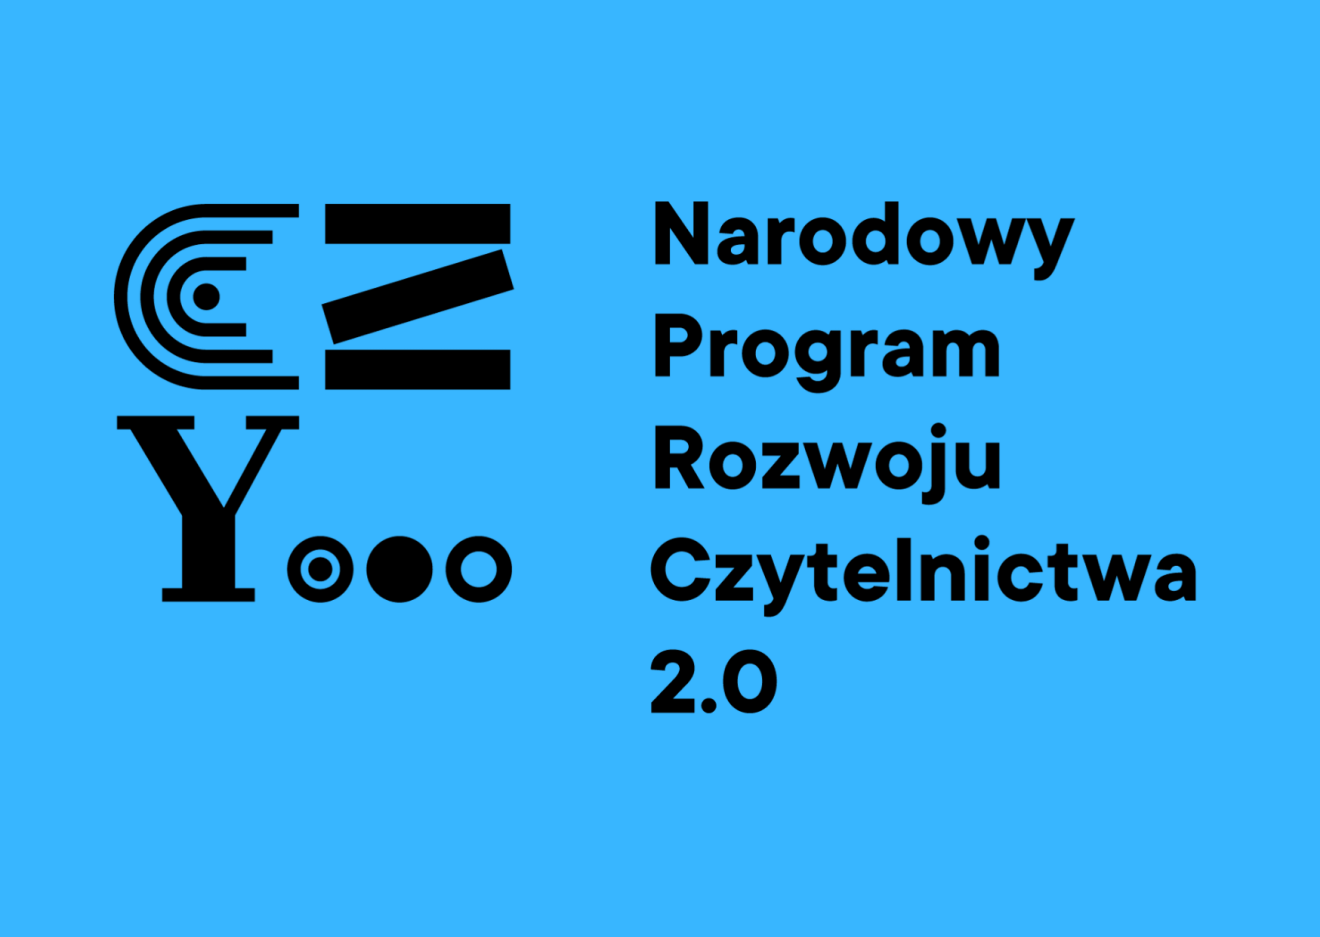 NPRCz logo